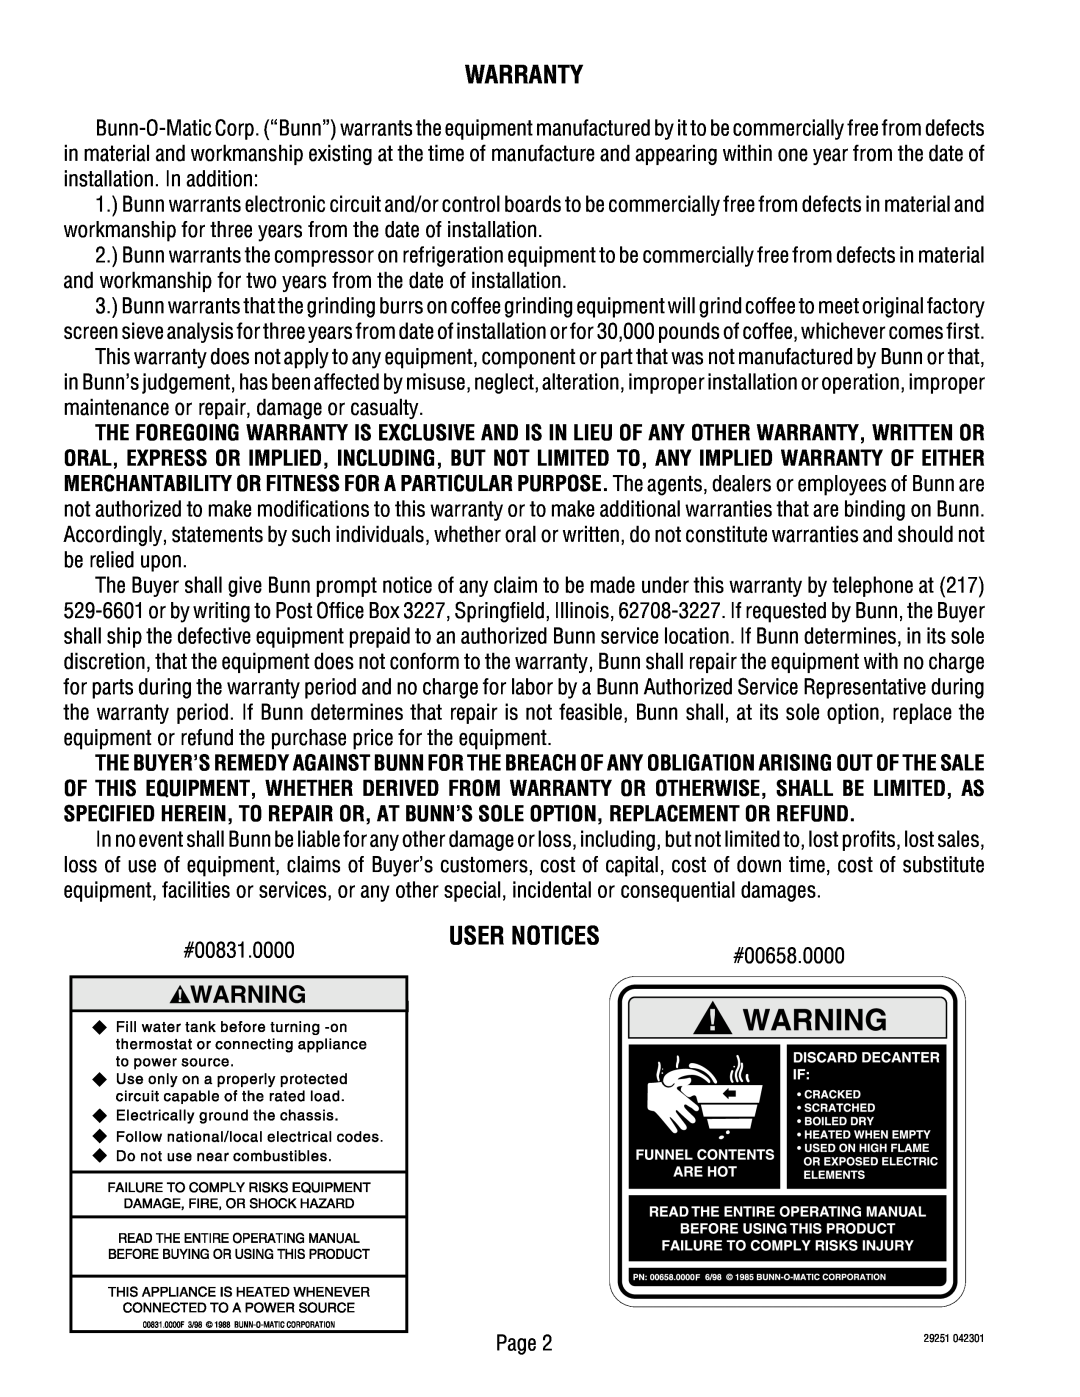 Bunn STA, STFA, SA service manual Warranty, User Notices 